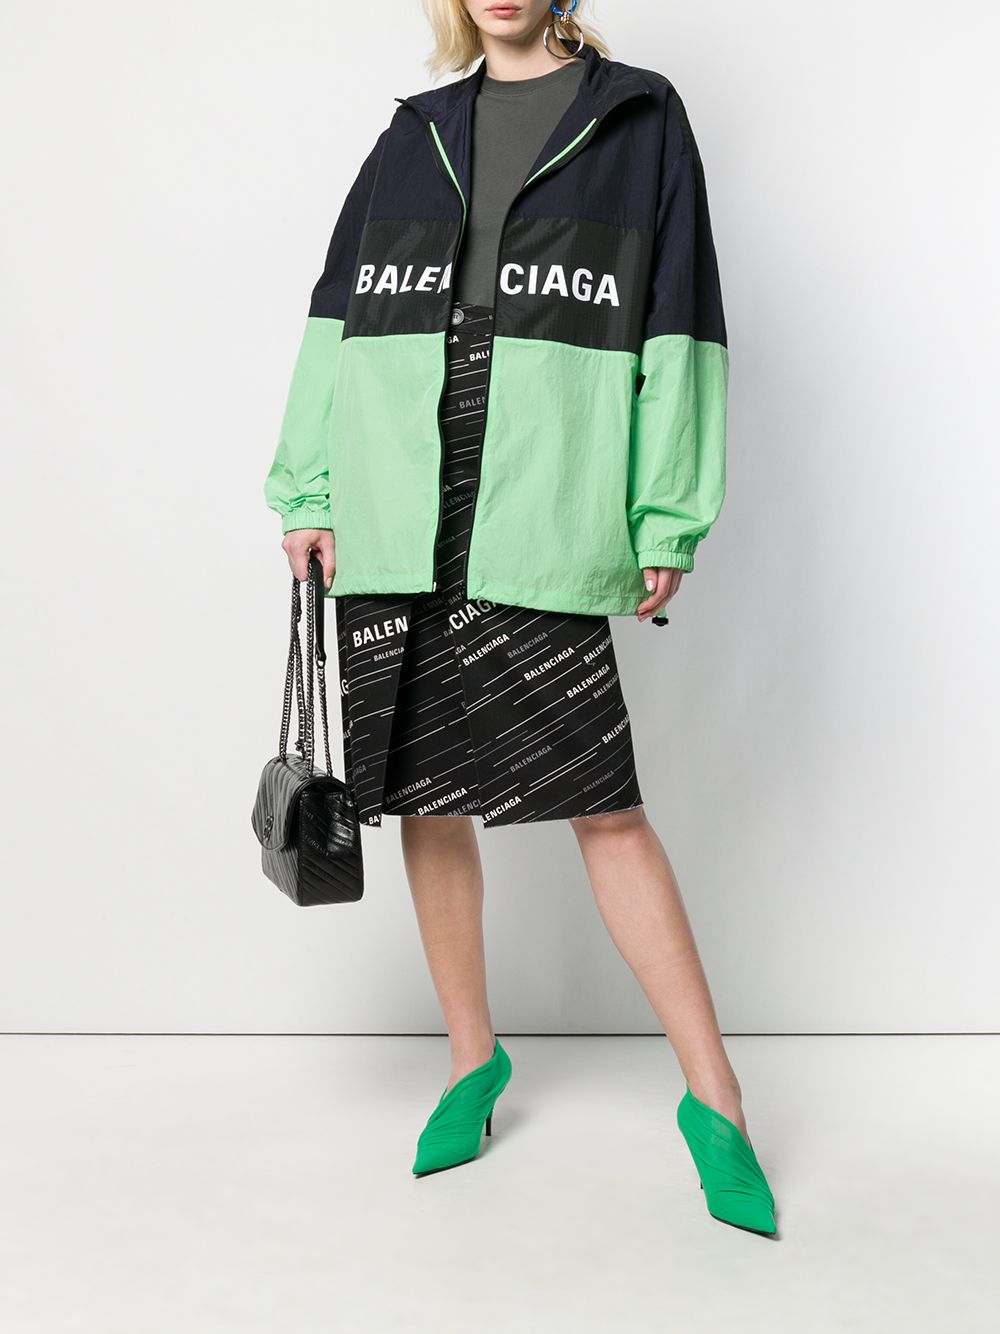 фото Balenciaga куртка на молнии с логотипом